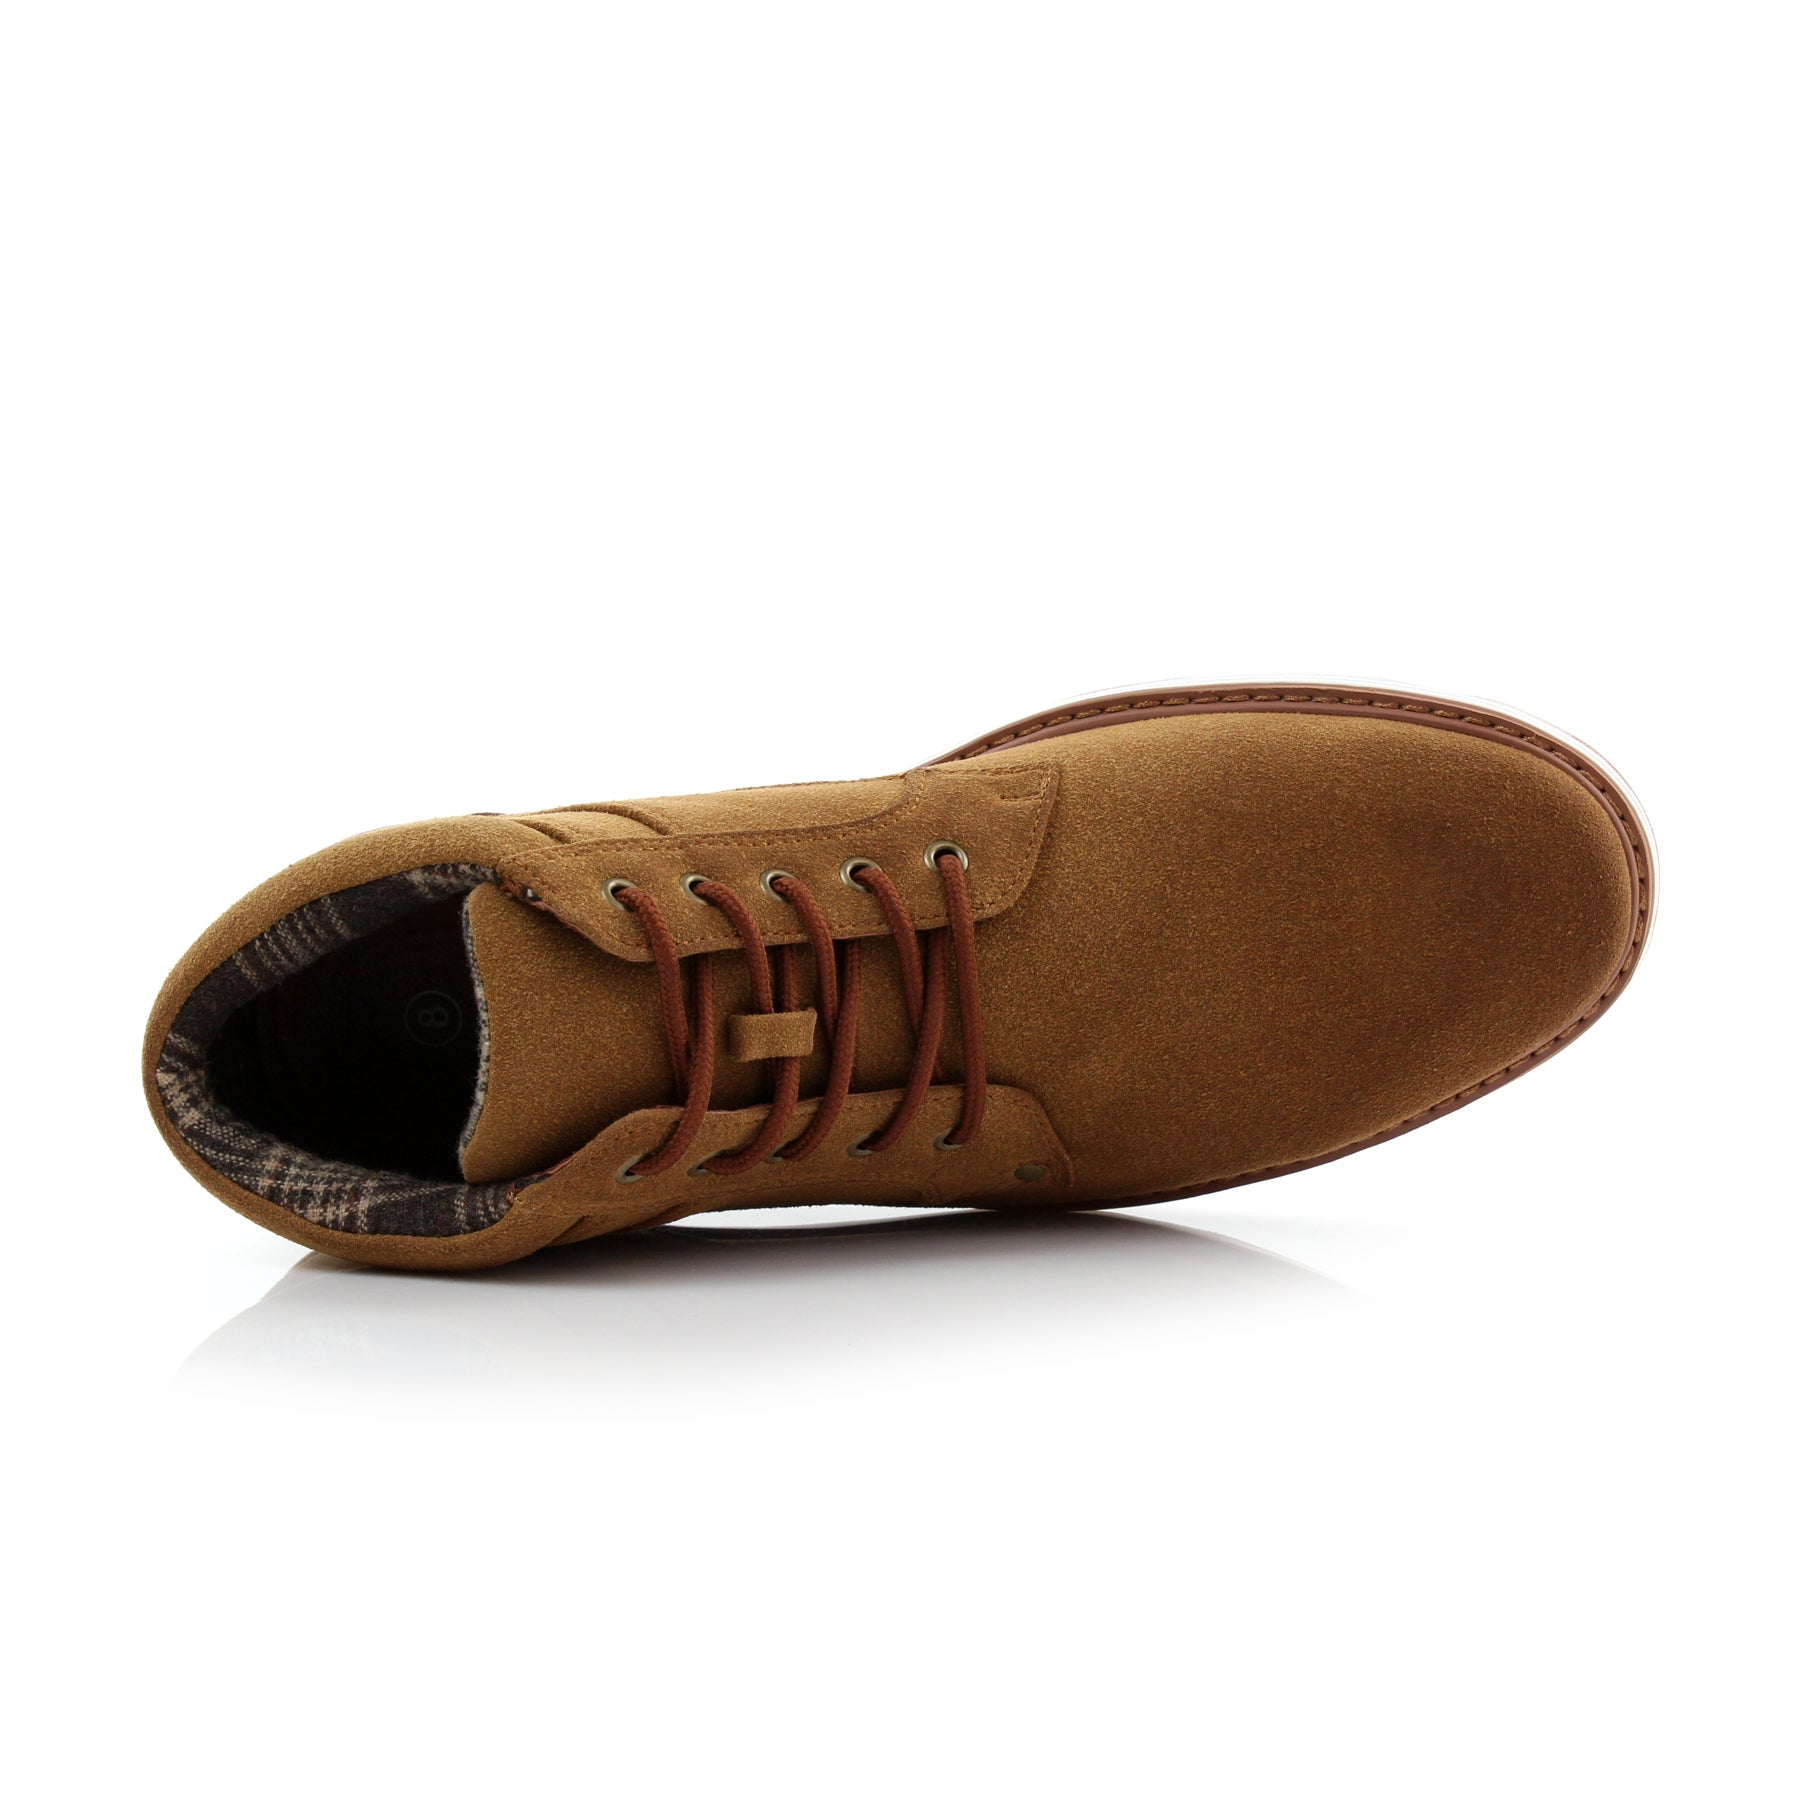 Suede Sneakers | Jax by Ferro Aldo | Conal Footwear | Top-Down Angle View